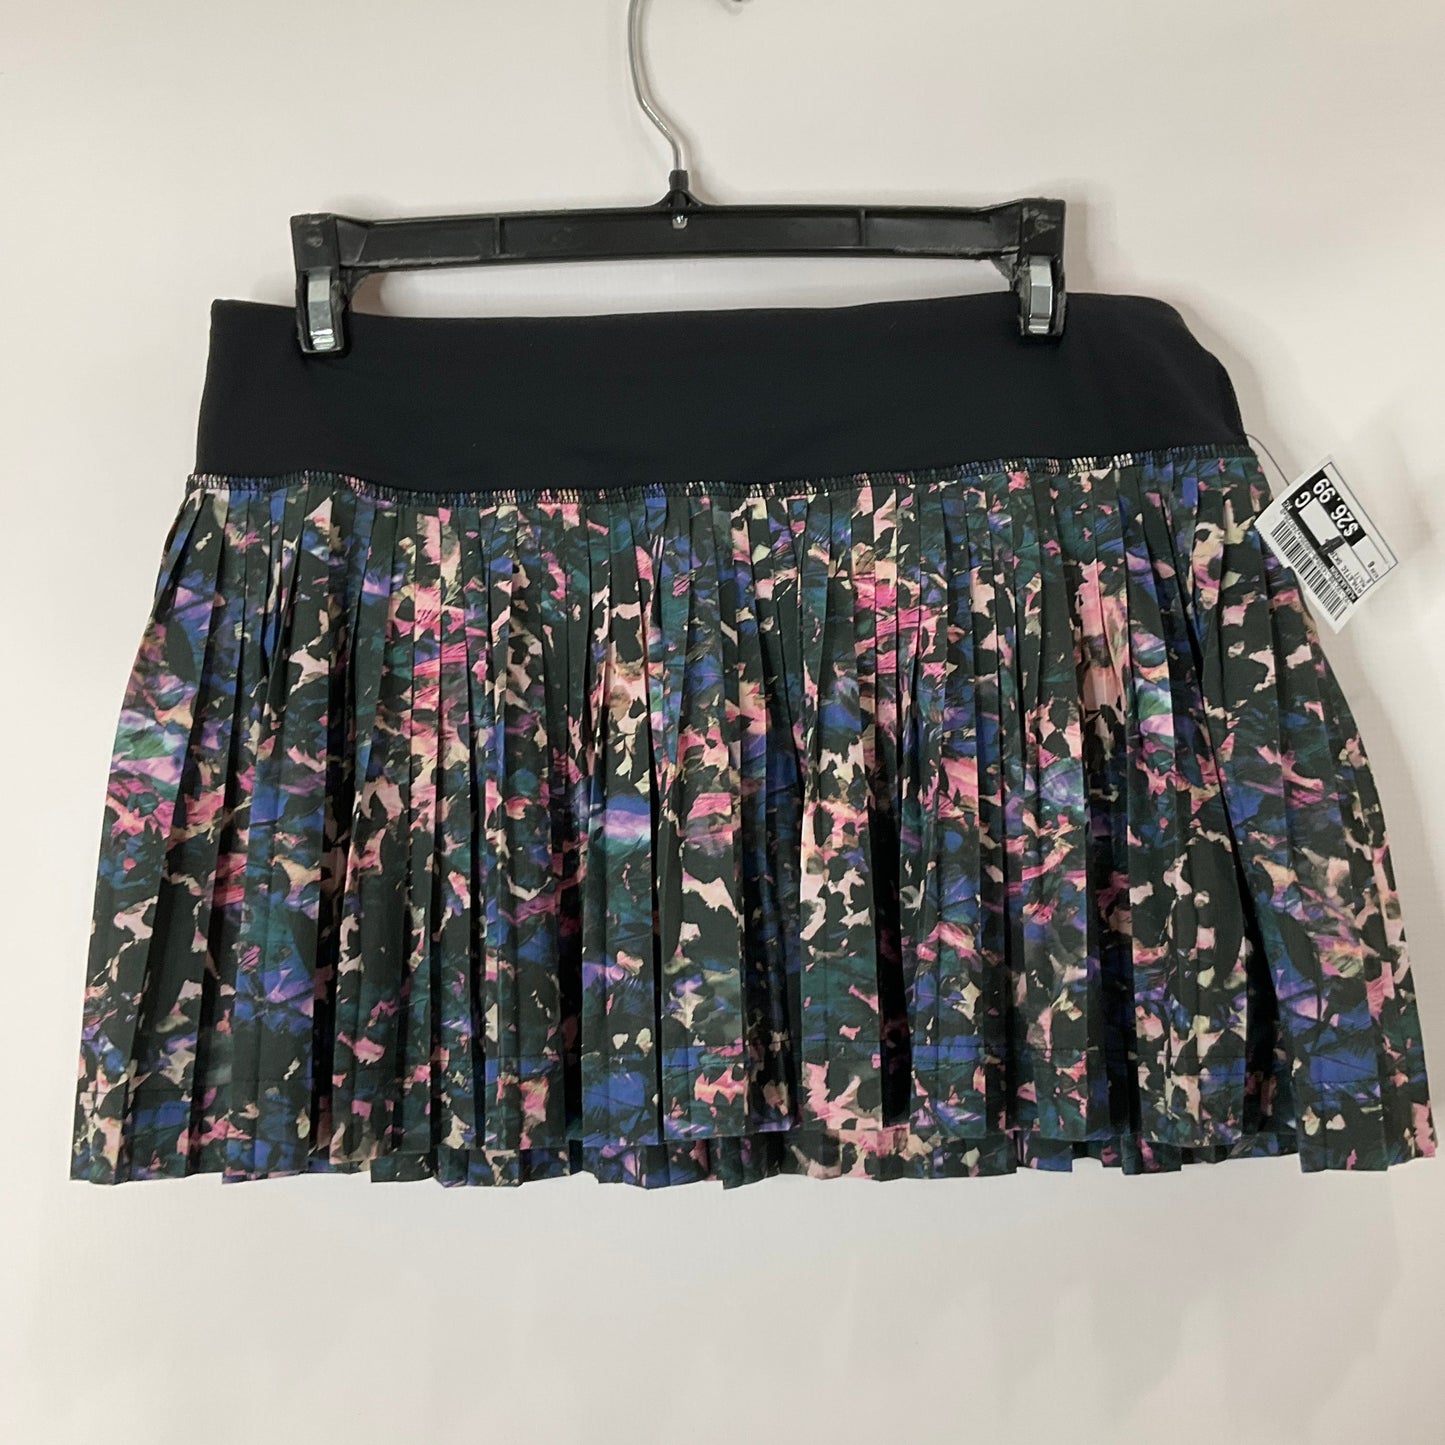 Multi-colored Athletic Skirt Lululemon, Size 6